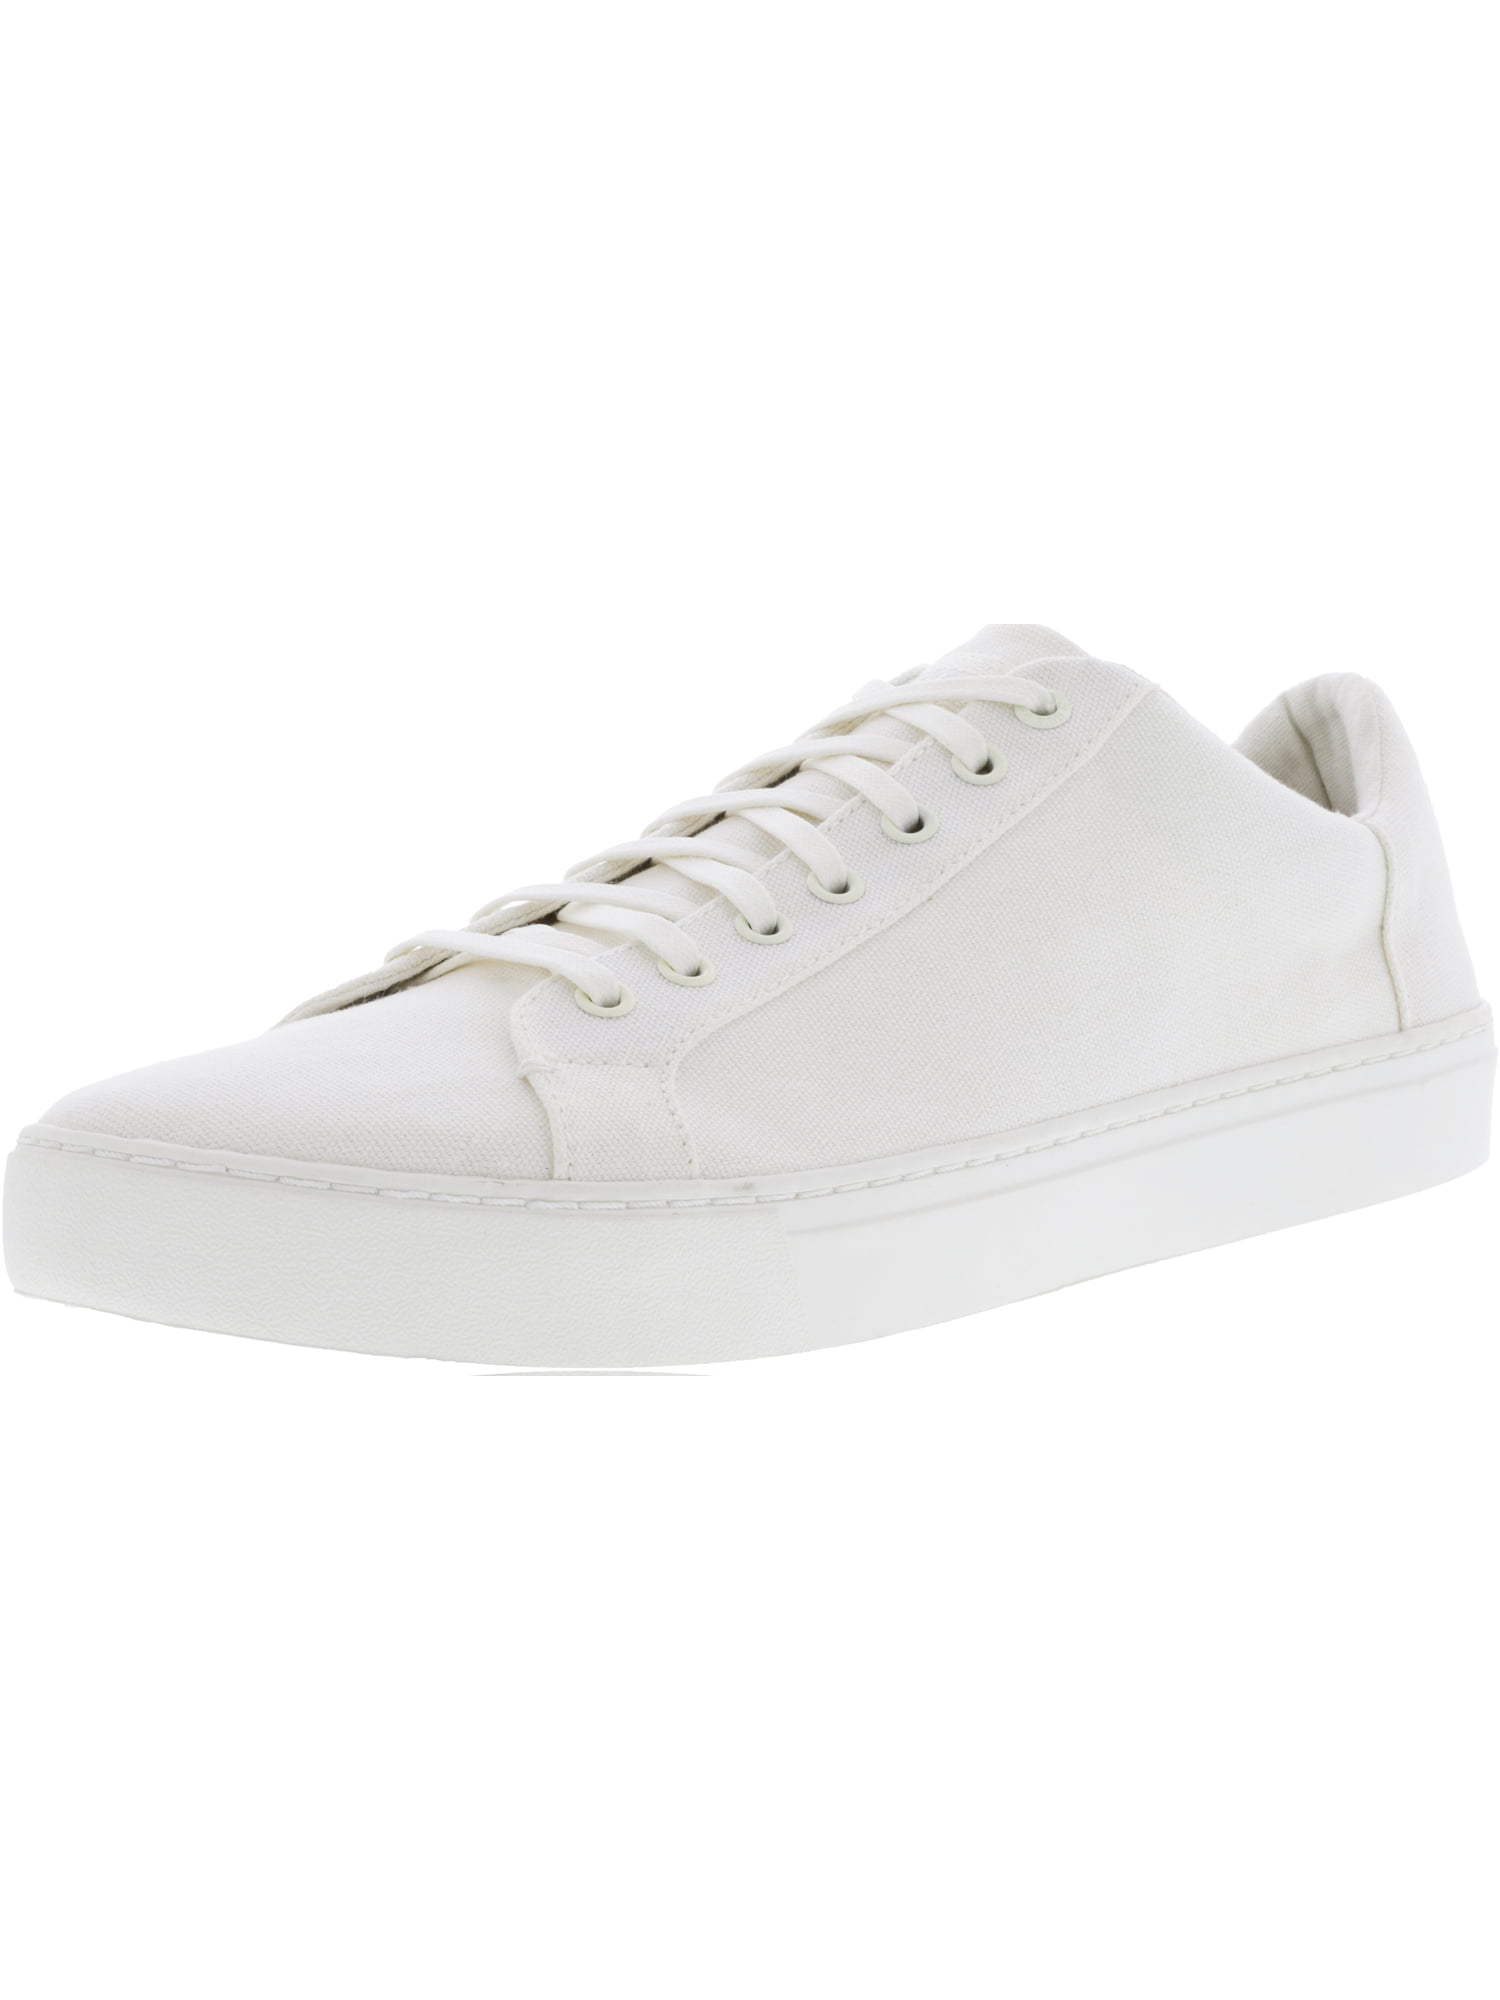 Toms Men's Lenox Canvas White Ankle-High Fashion Sneaker - 9.5M ...